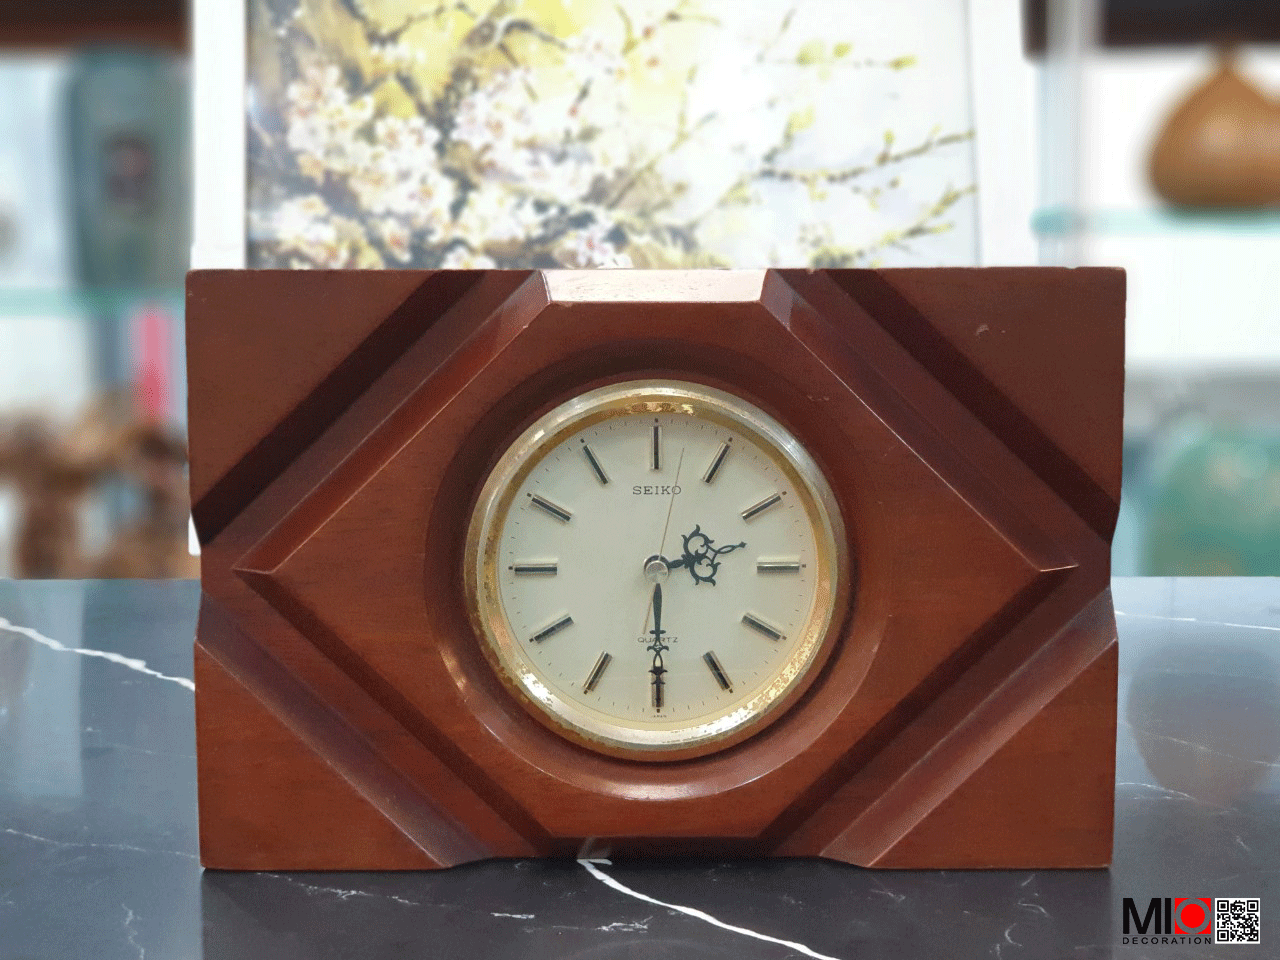 Đồng hồ Seiko gỗ PVN45